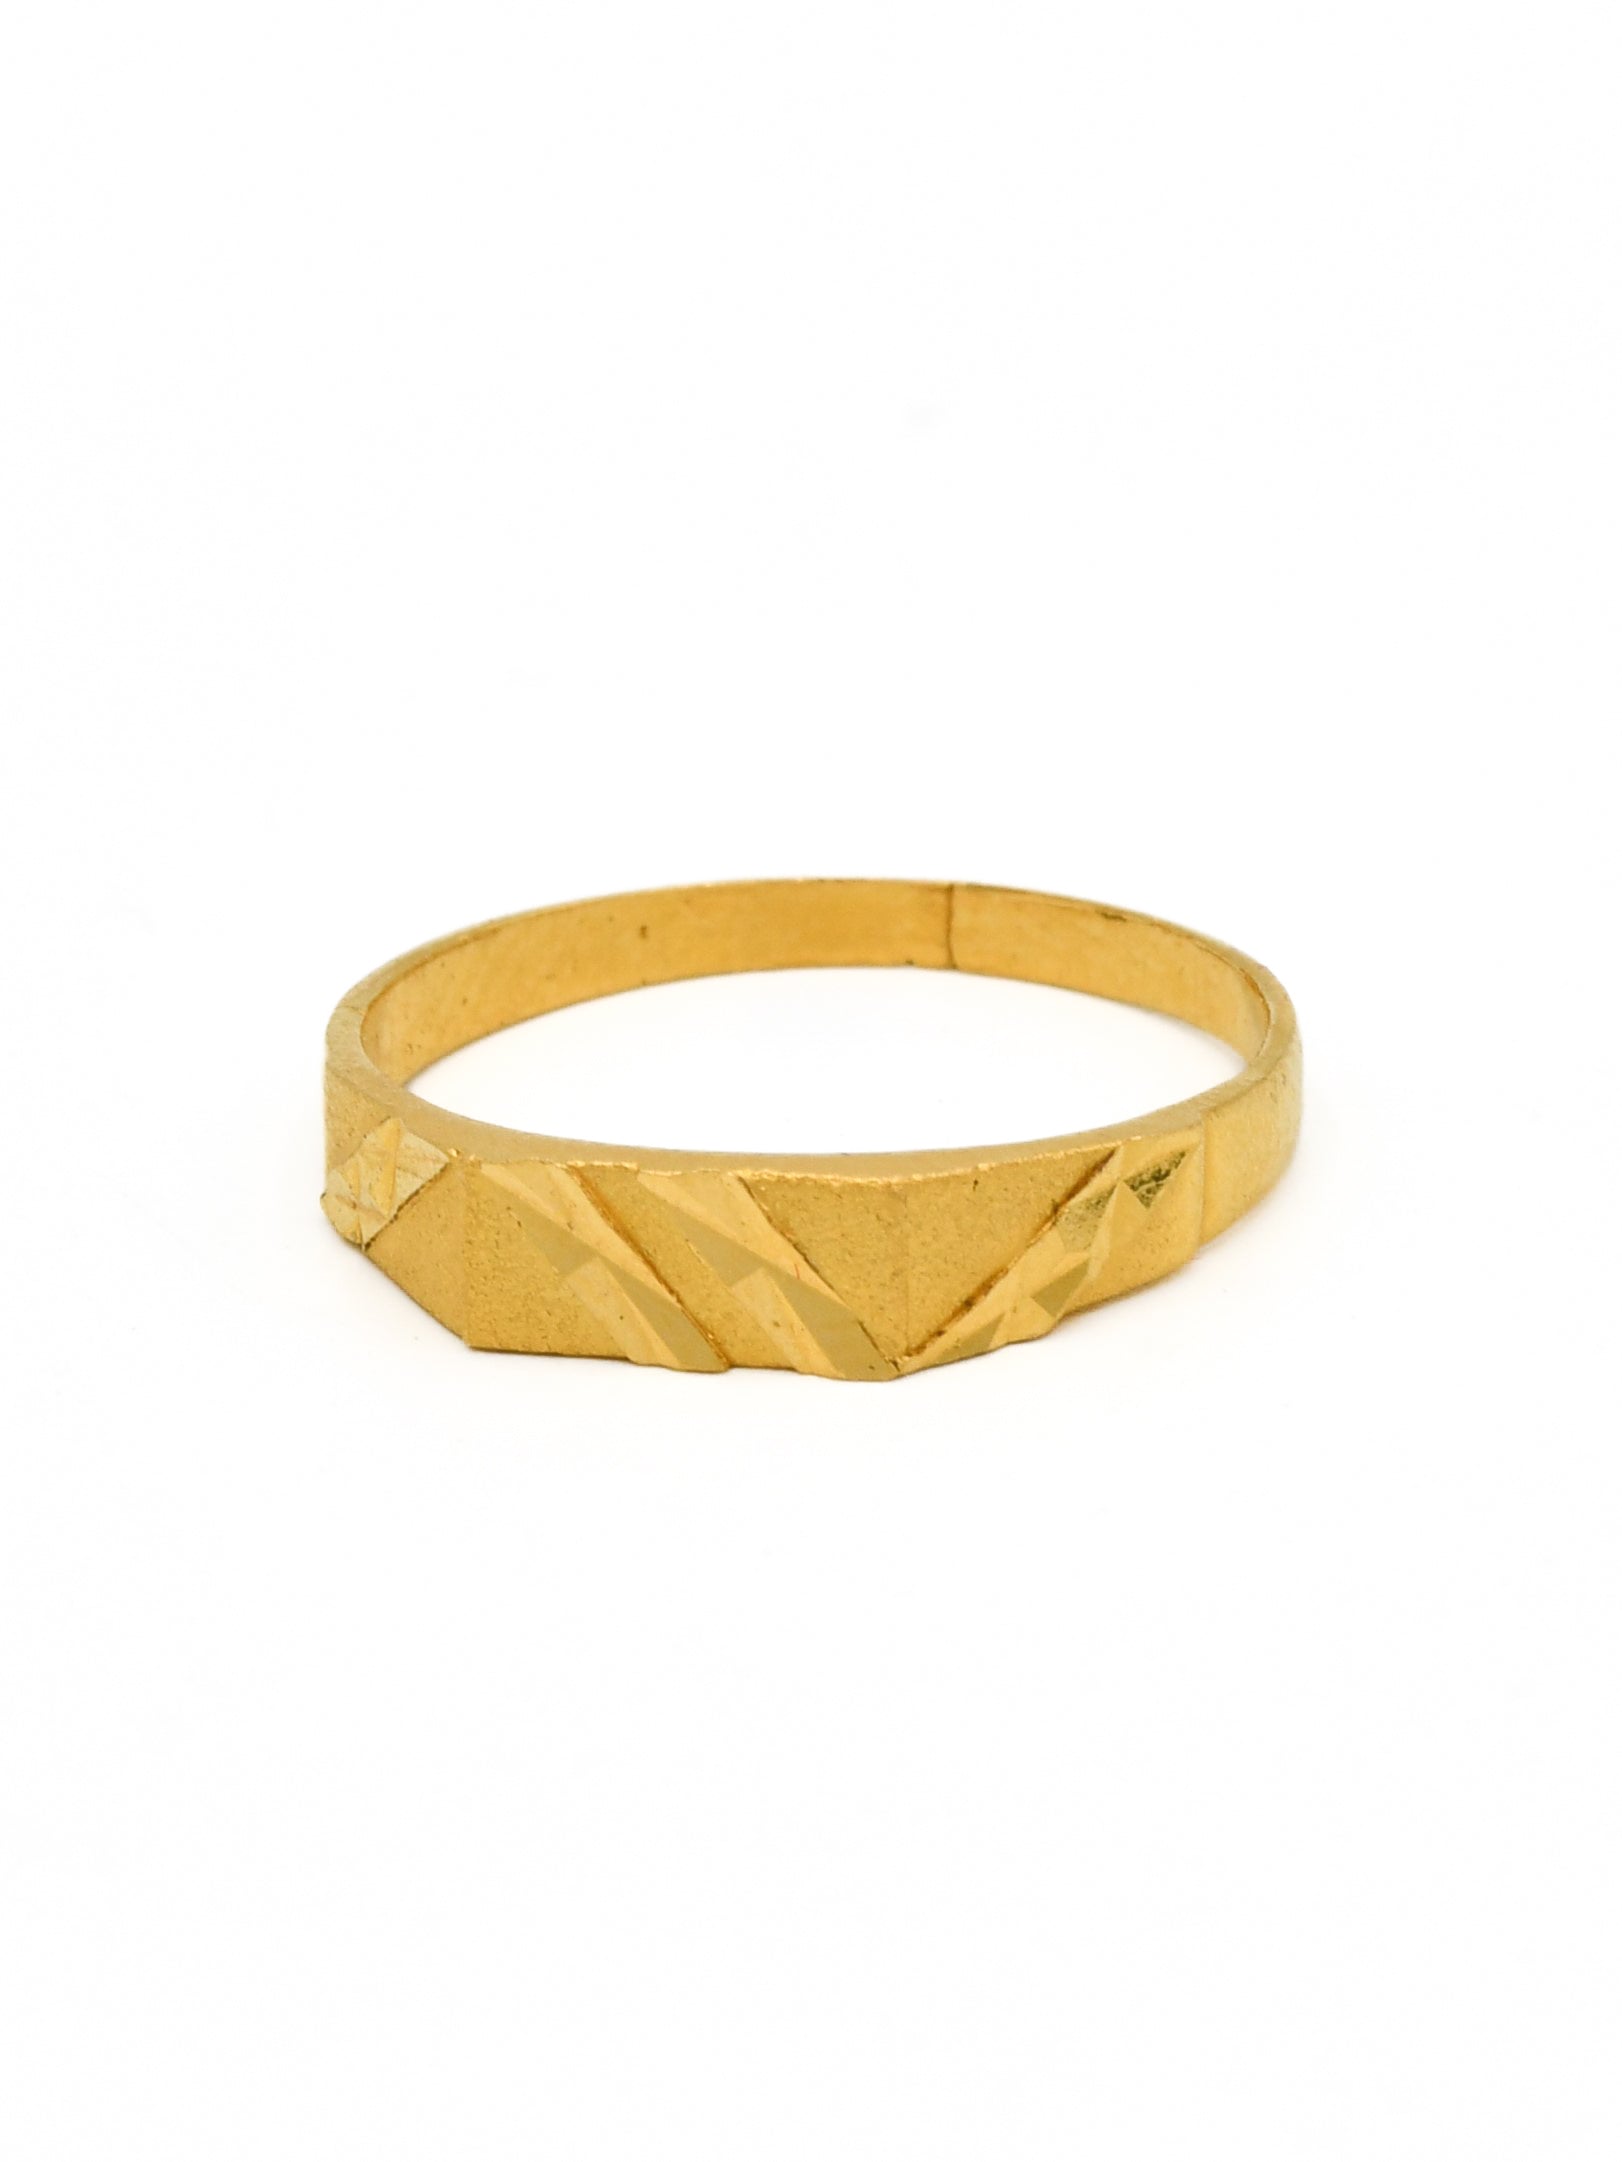 22ct Gold Ring - Roop Darshan